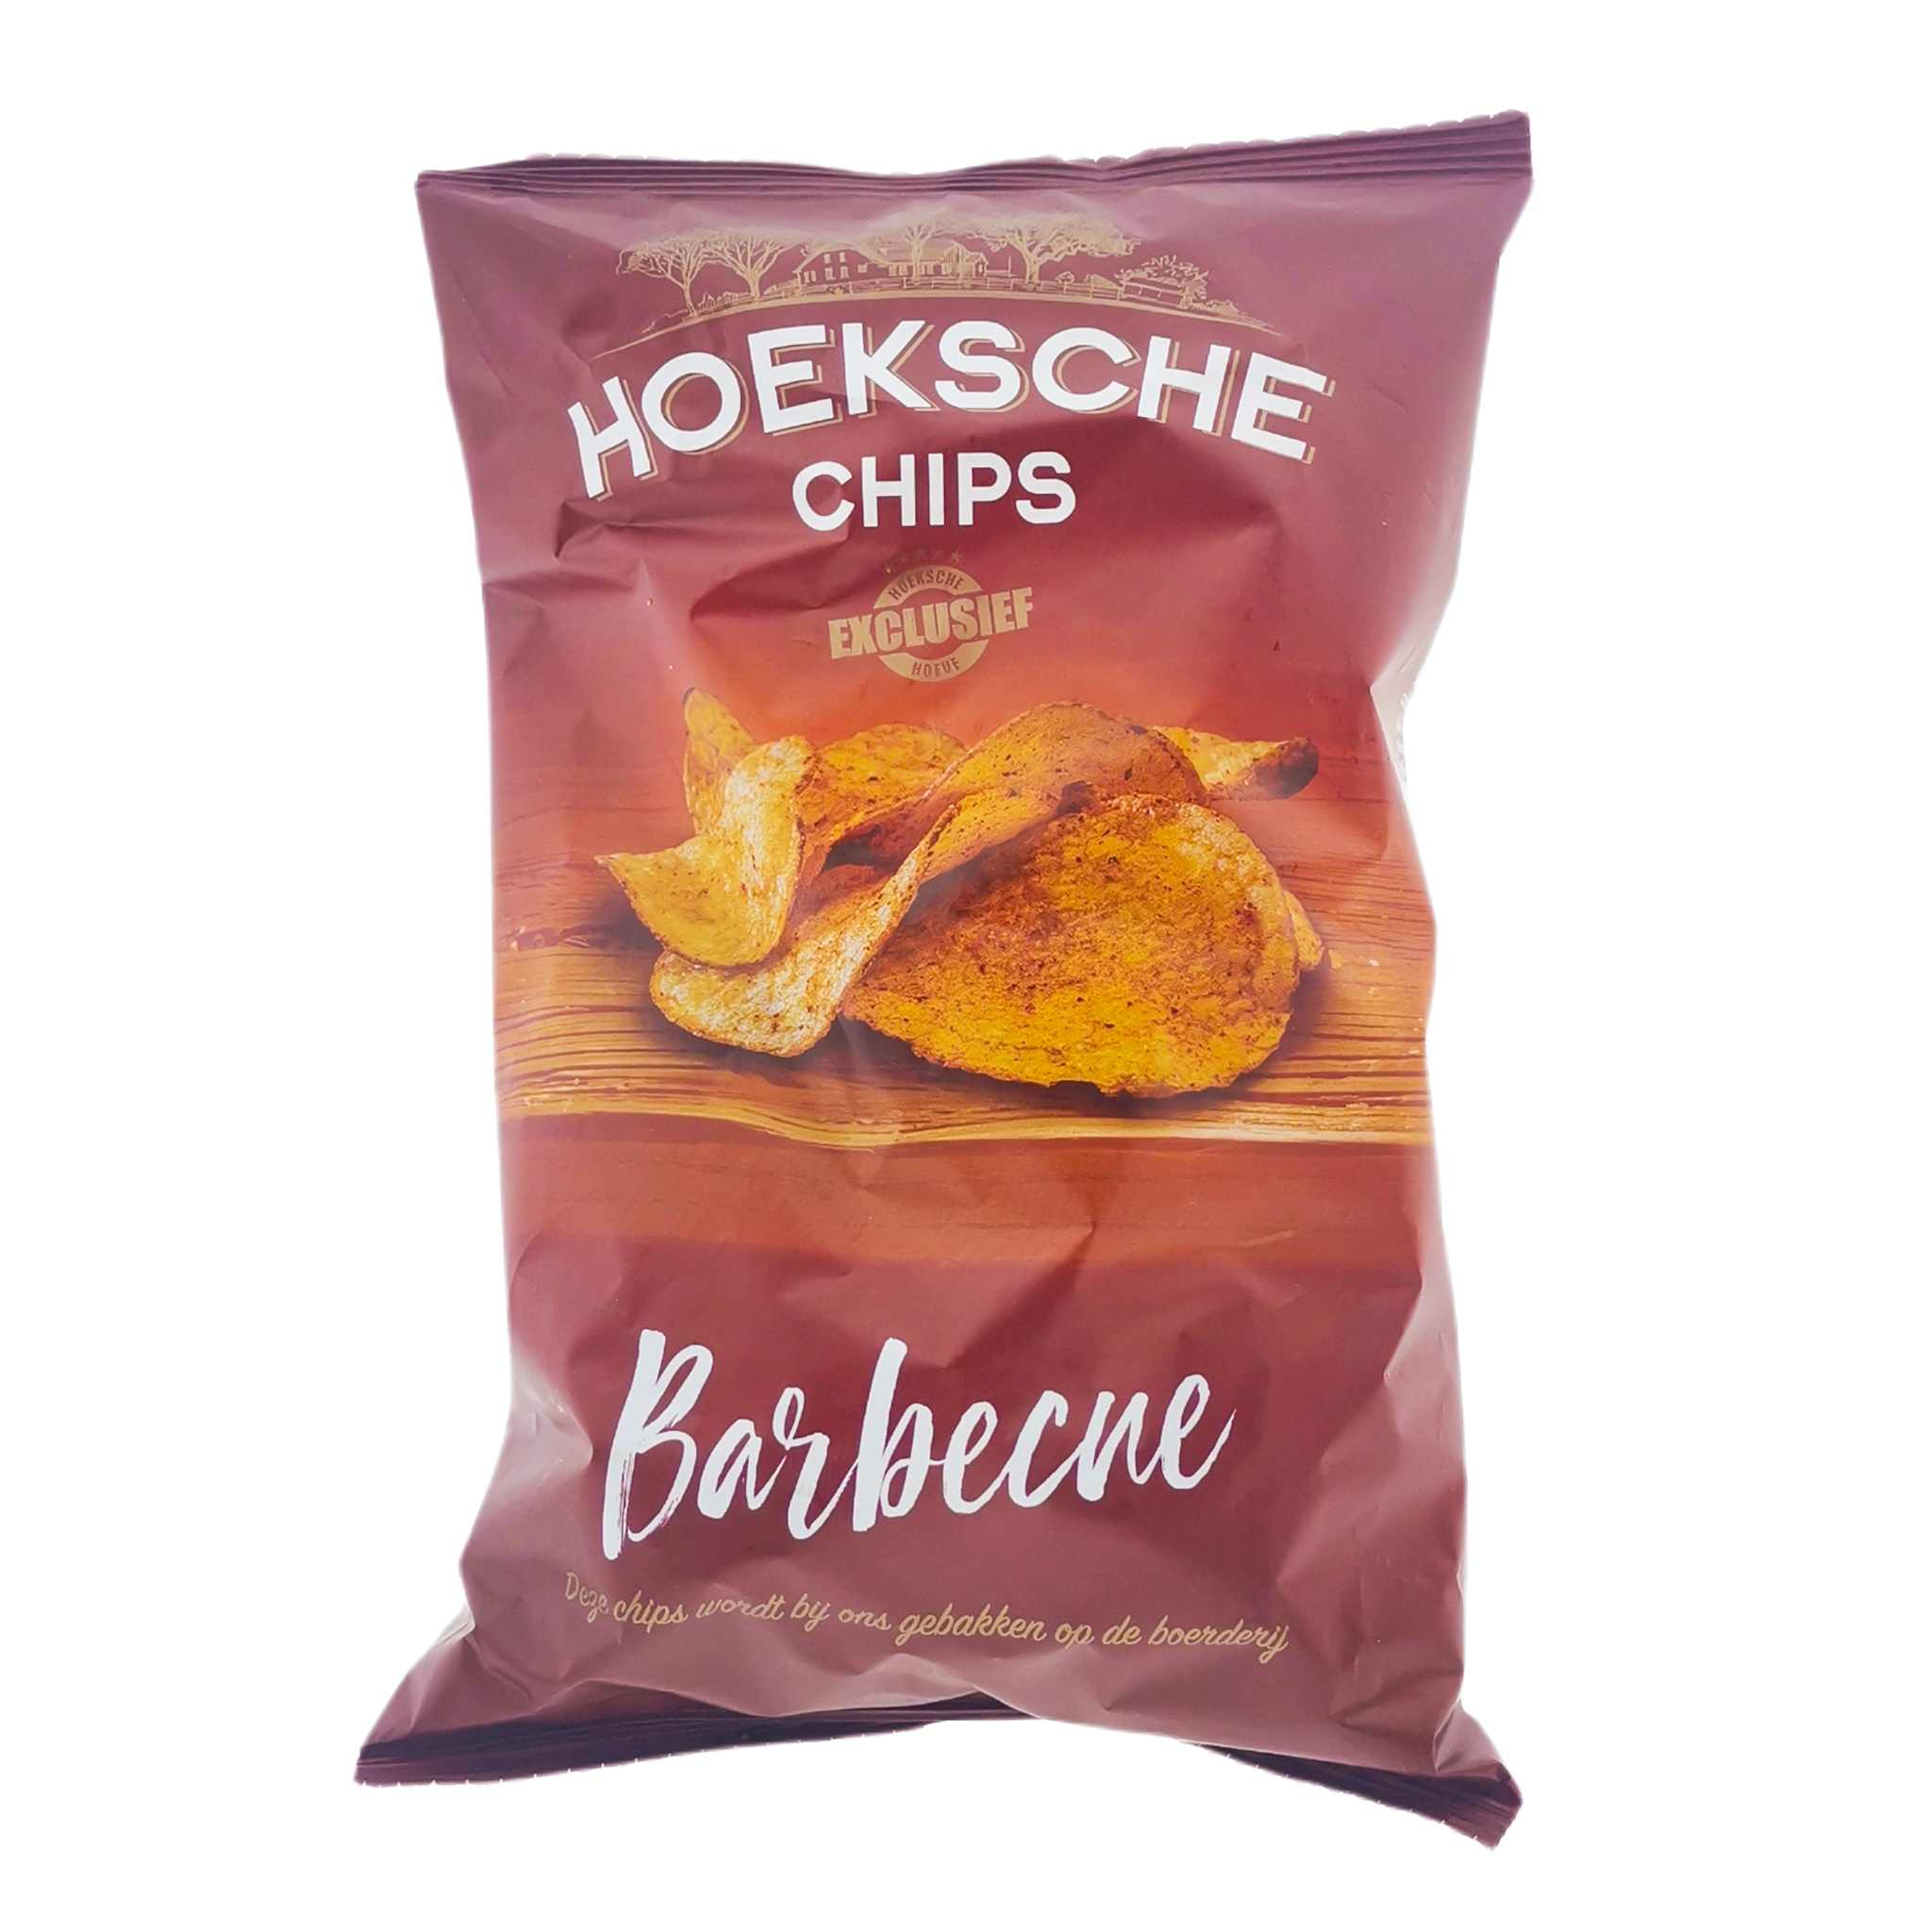 Foto's in MagicBOX Vakb Foodspec 22 Hoeksche chips (1)-2